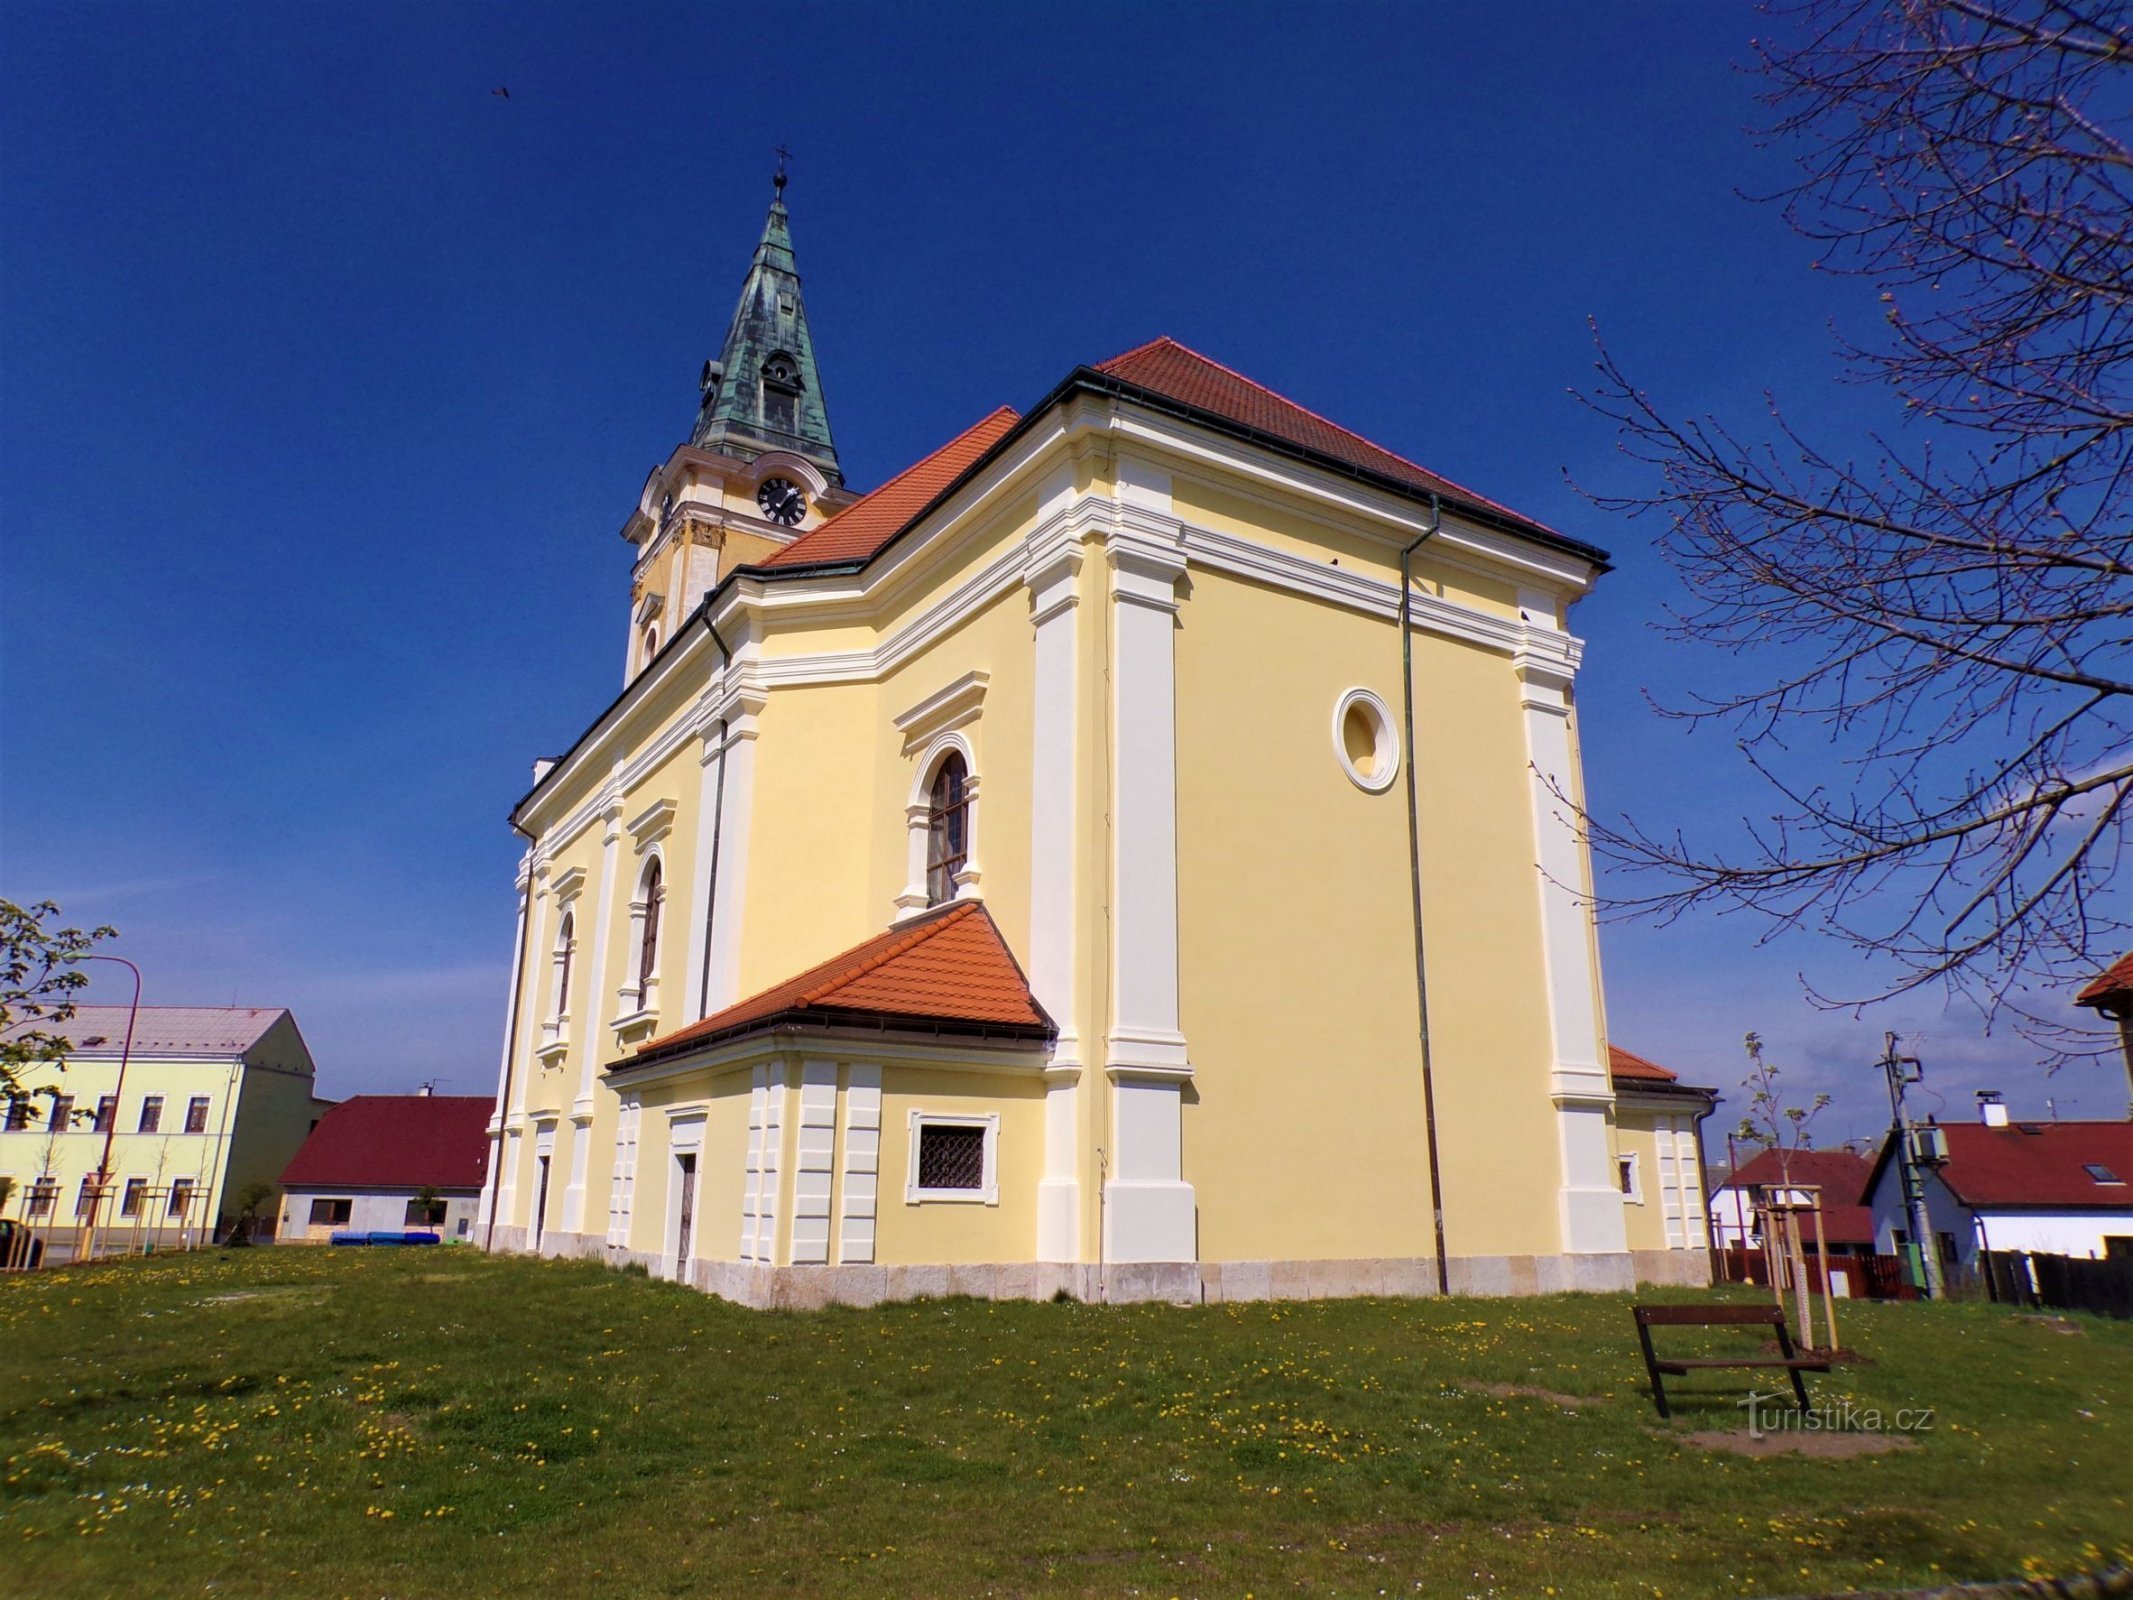 Igreja de St. Estanislava (Smidary, 30.4.2021/XNUMX/XNUMX) See More